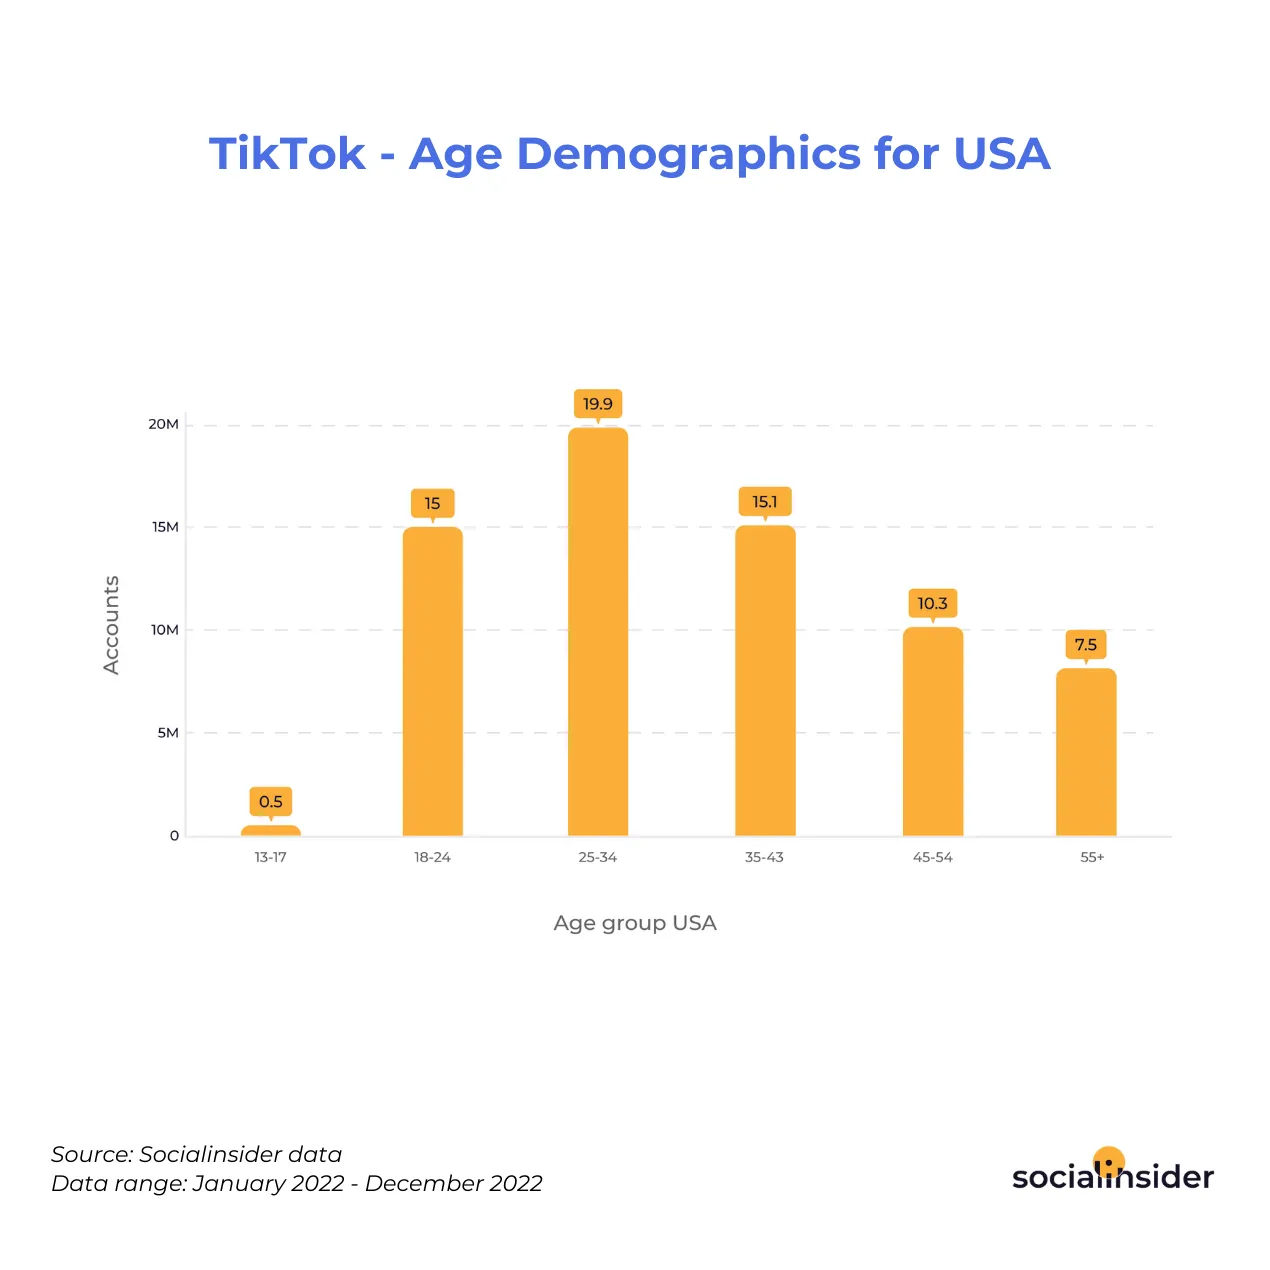 TikTok Age Demographics for the USA, according to Socialinsider